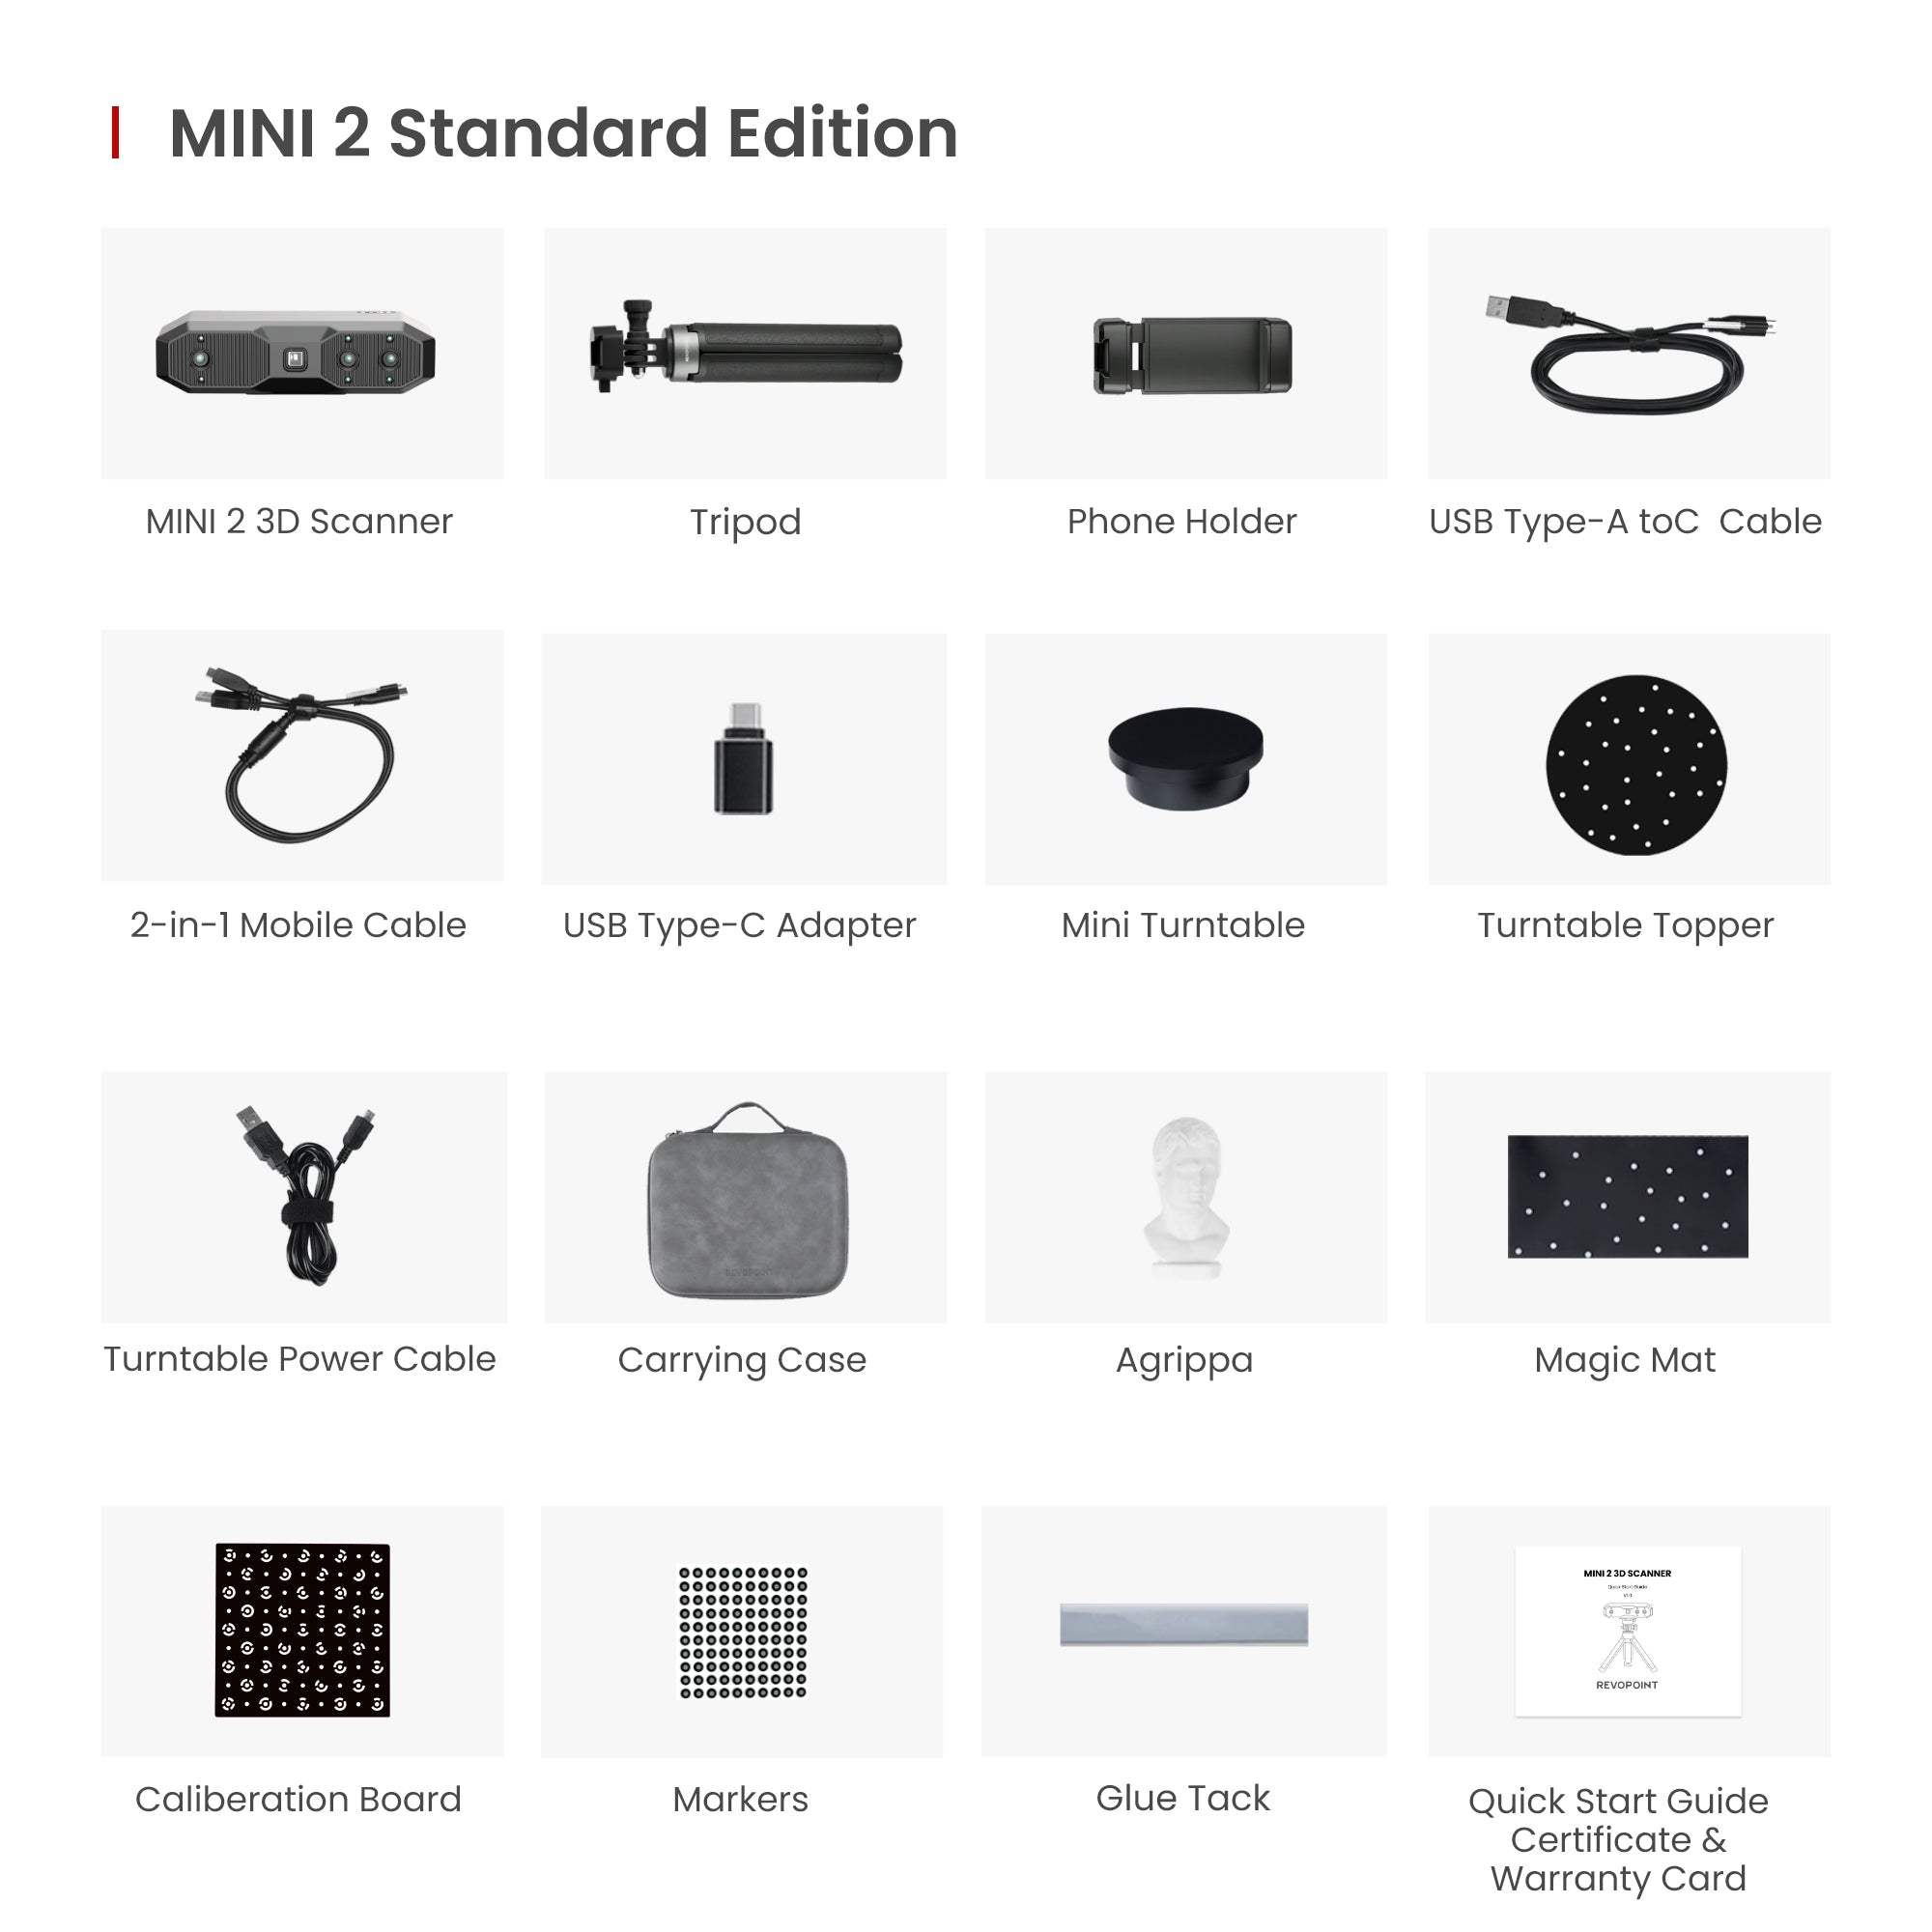 MINI 2 3D Scanner: Blue Light丨Precision 0.02mm